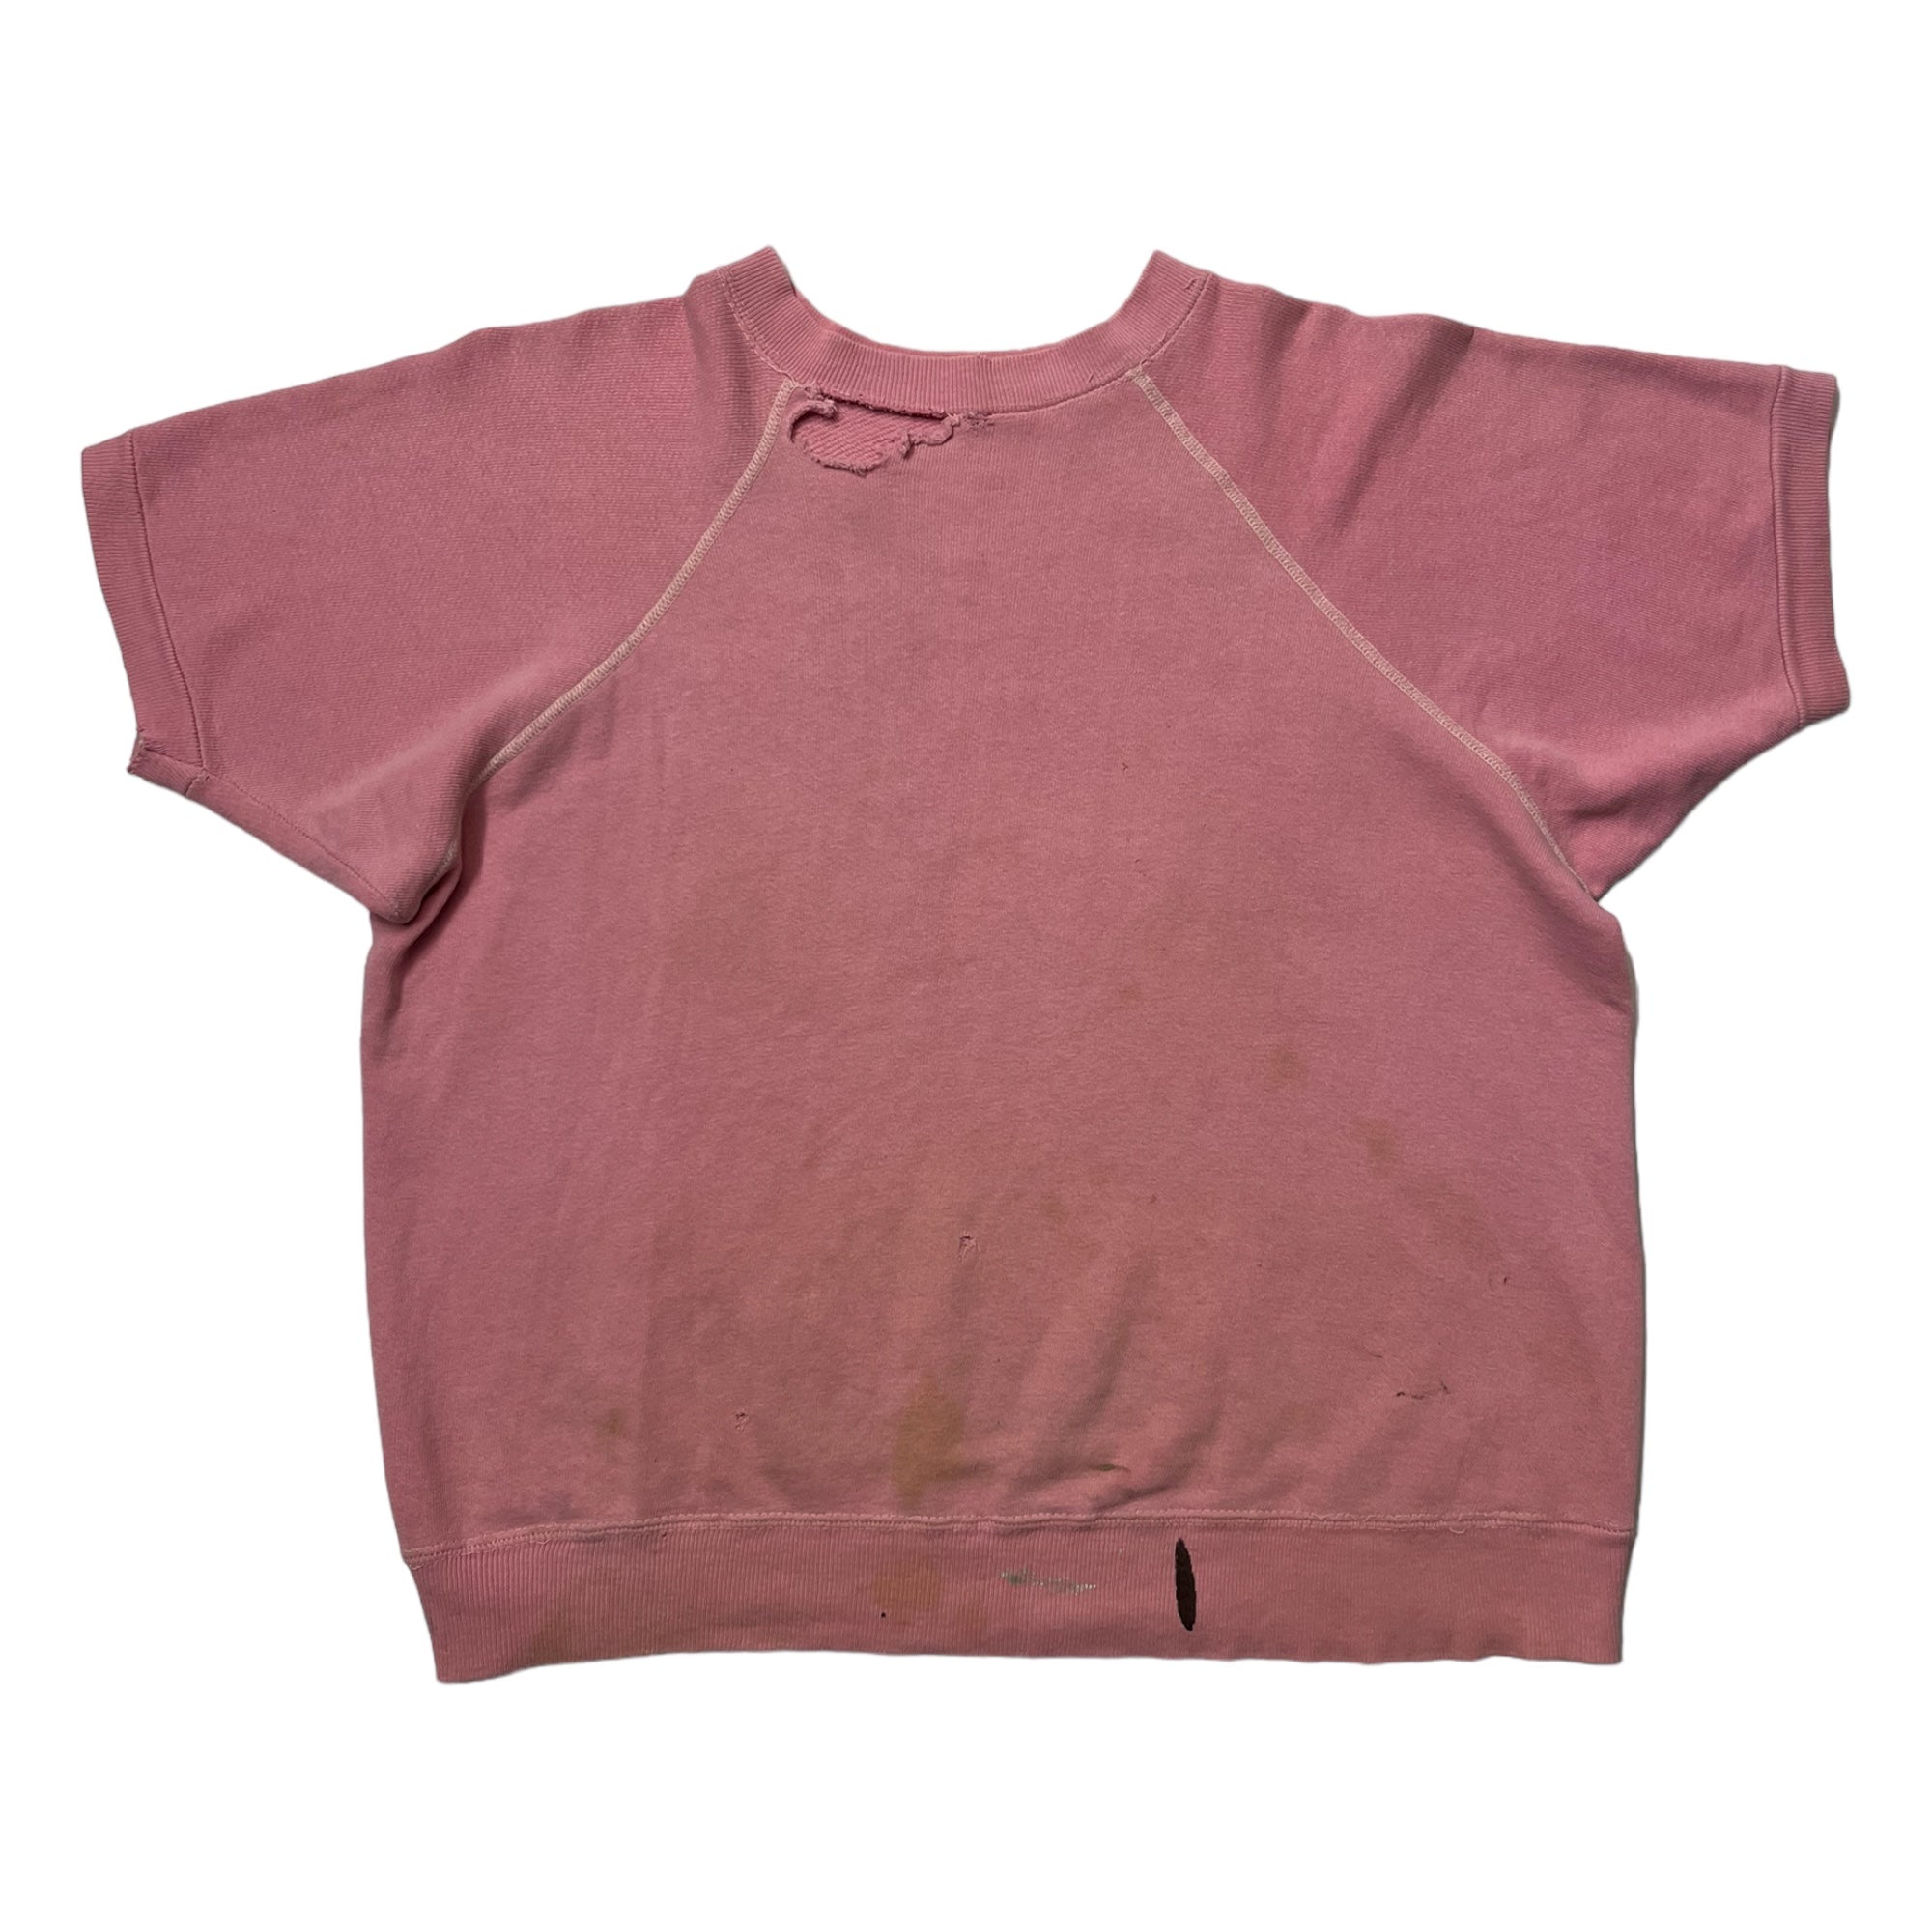 1970s Distressed Short-Sleeve Crewneck Sweatshirt - Dusty Pink - S/M